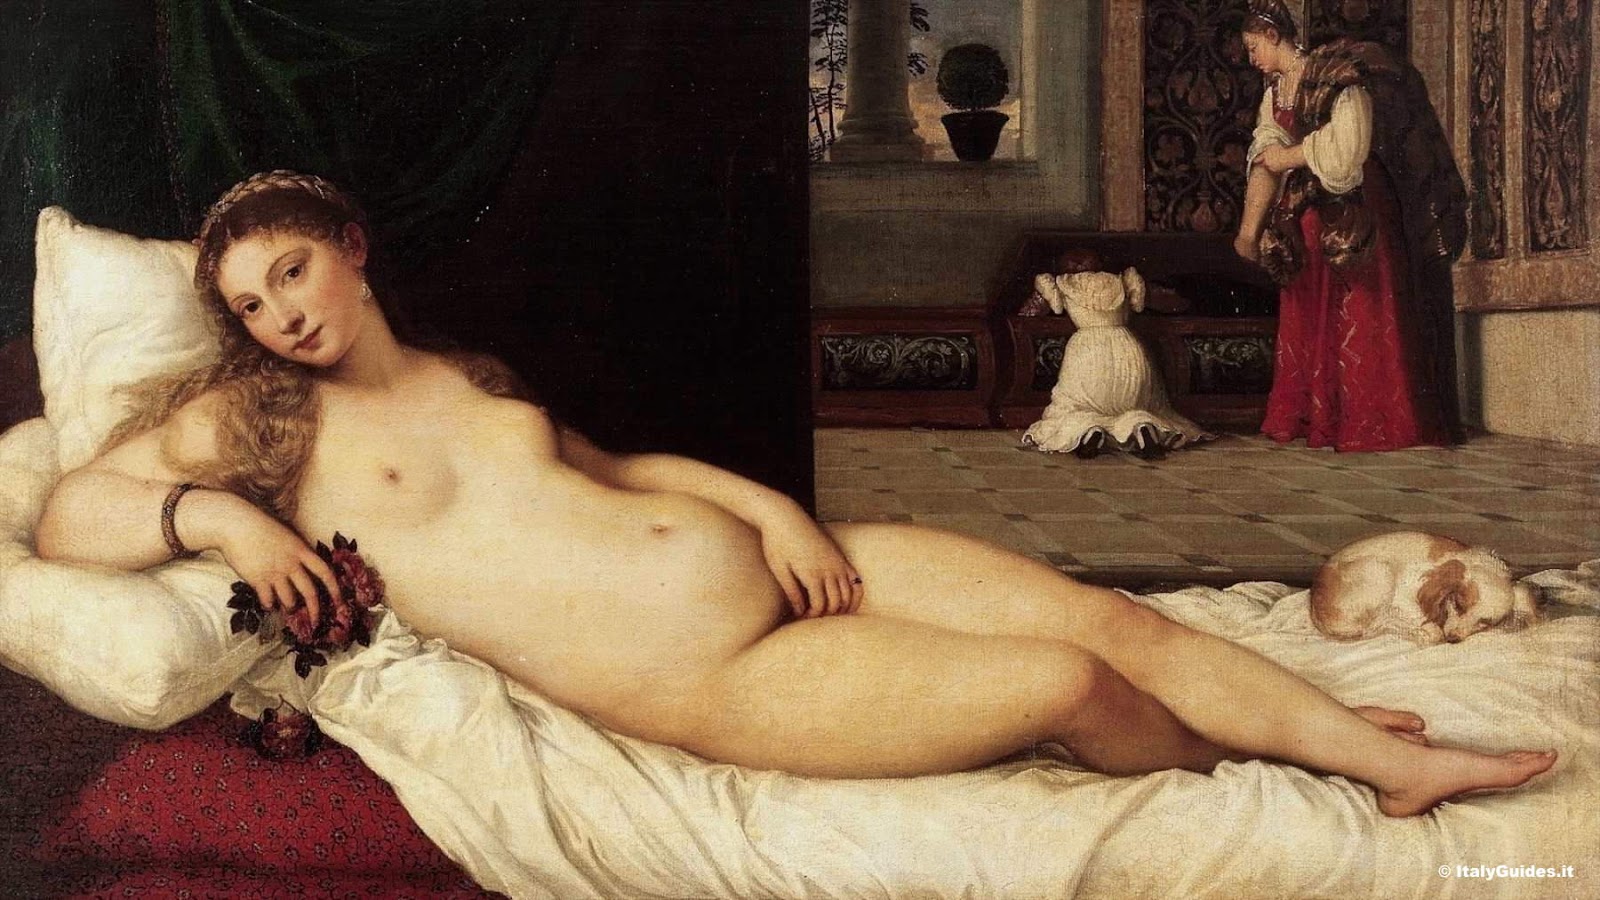 Titian+Danae-1540-1570 (5).jpg